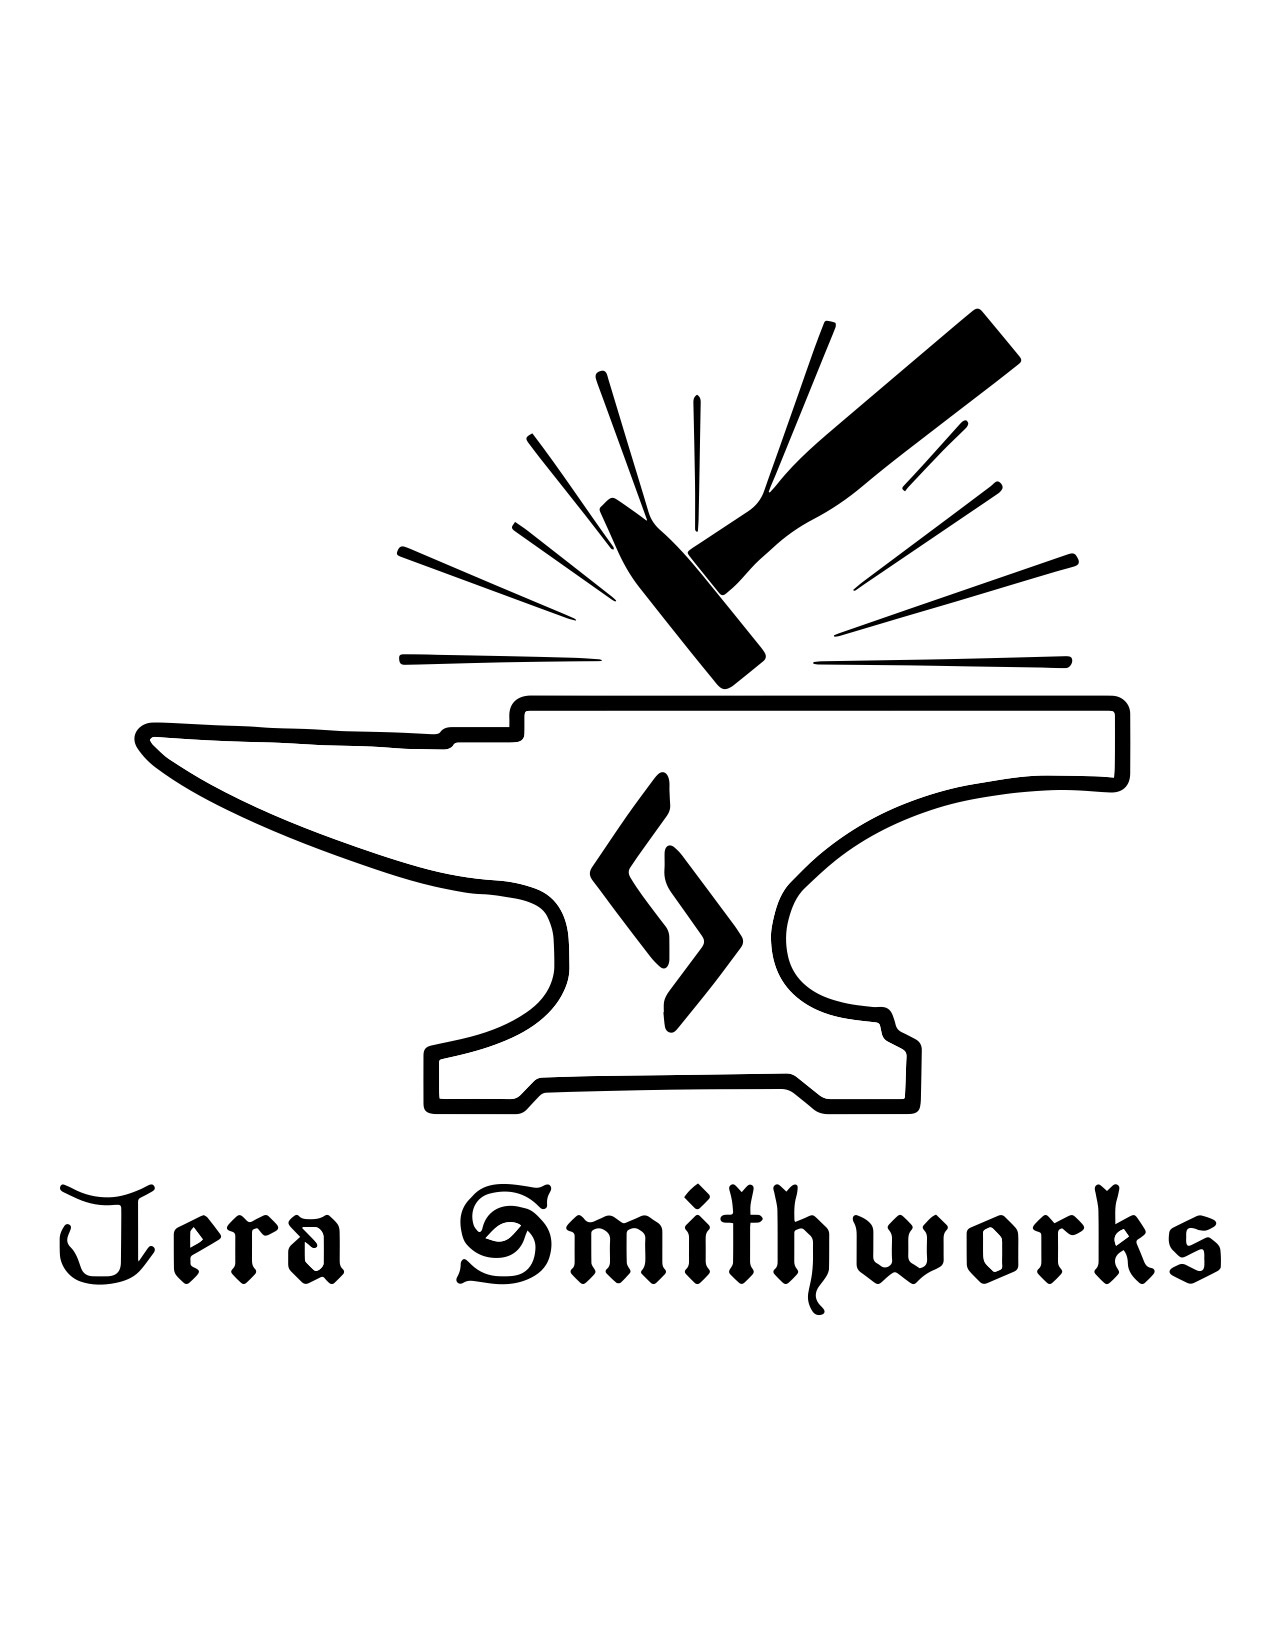 Jera Smithworks LLC